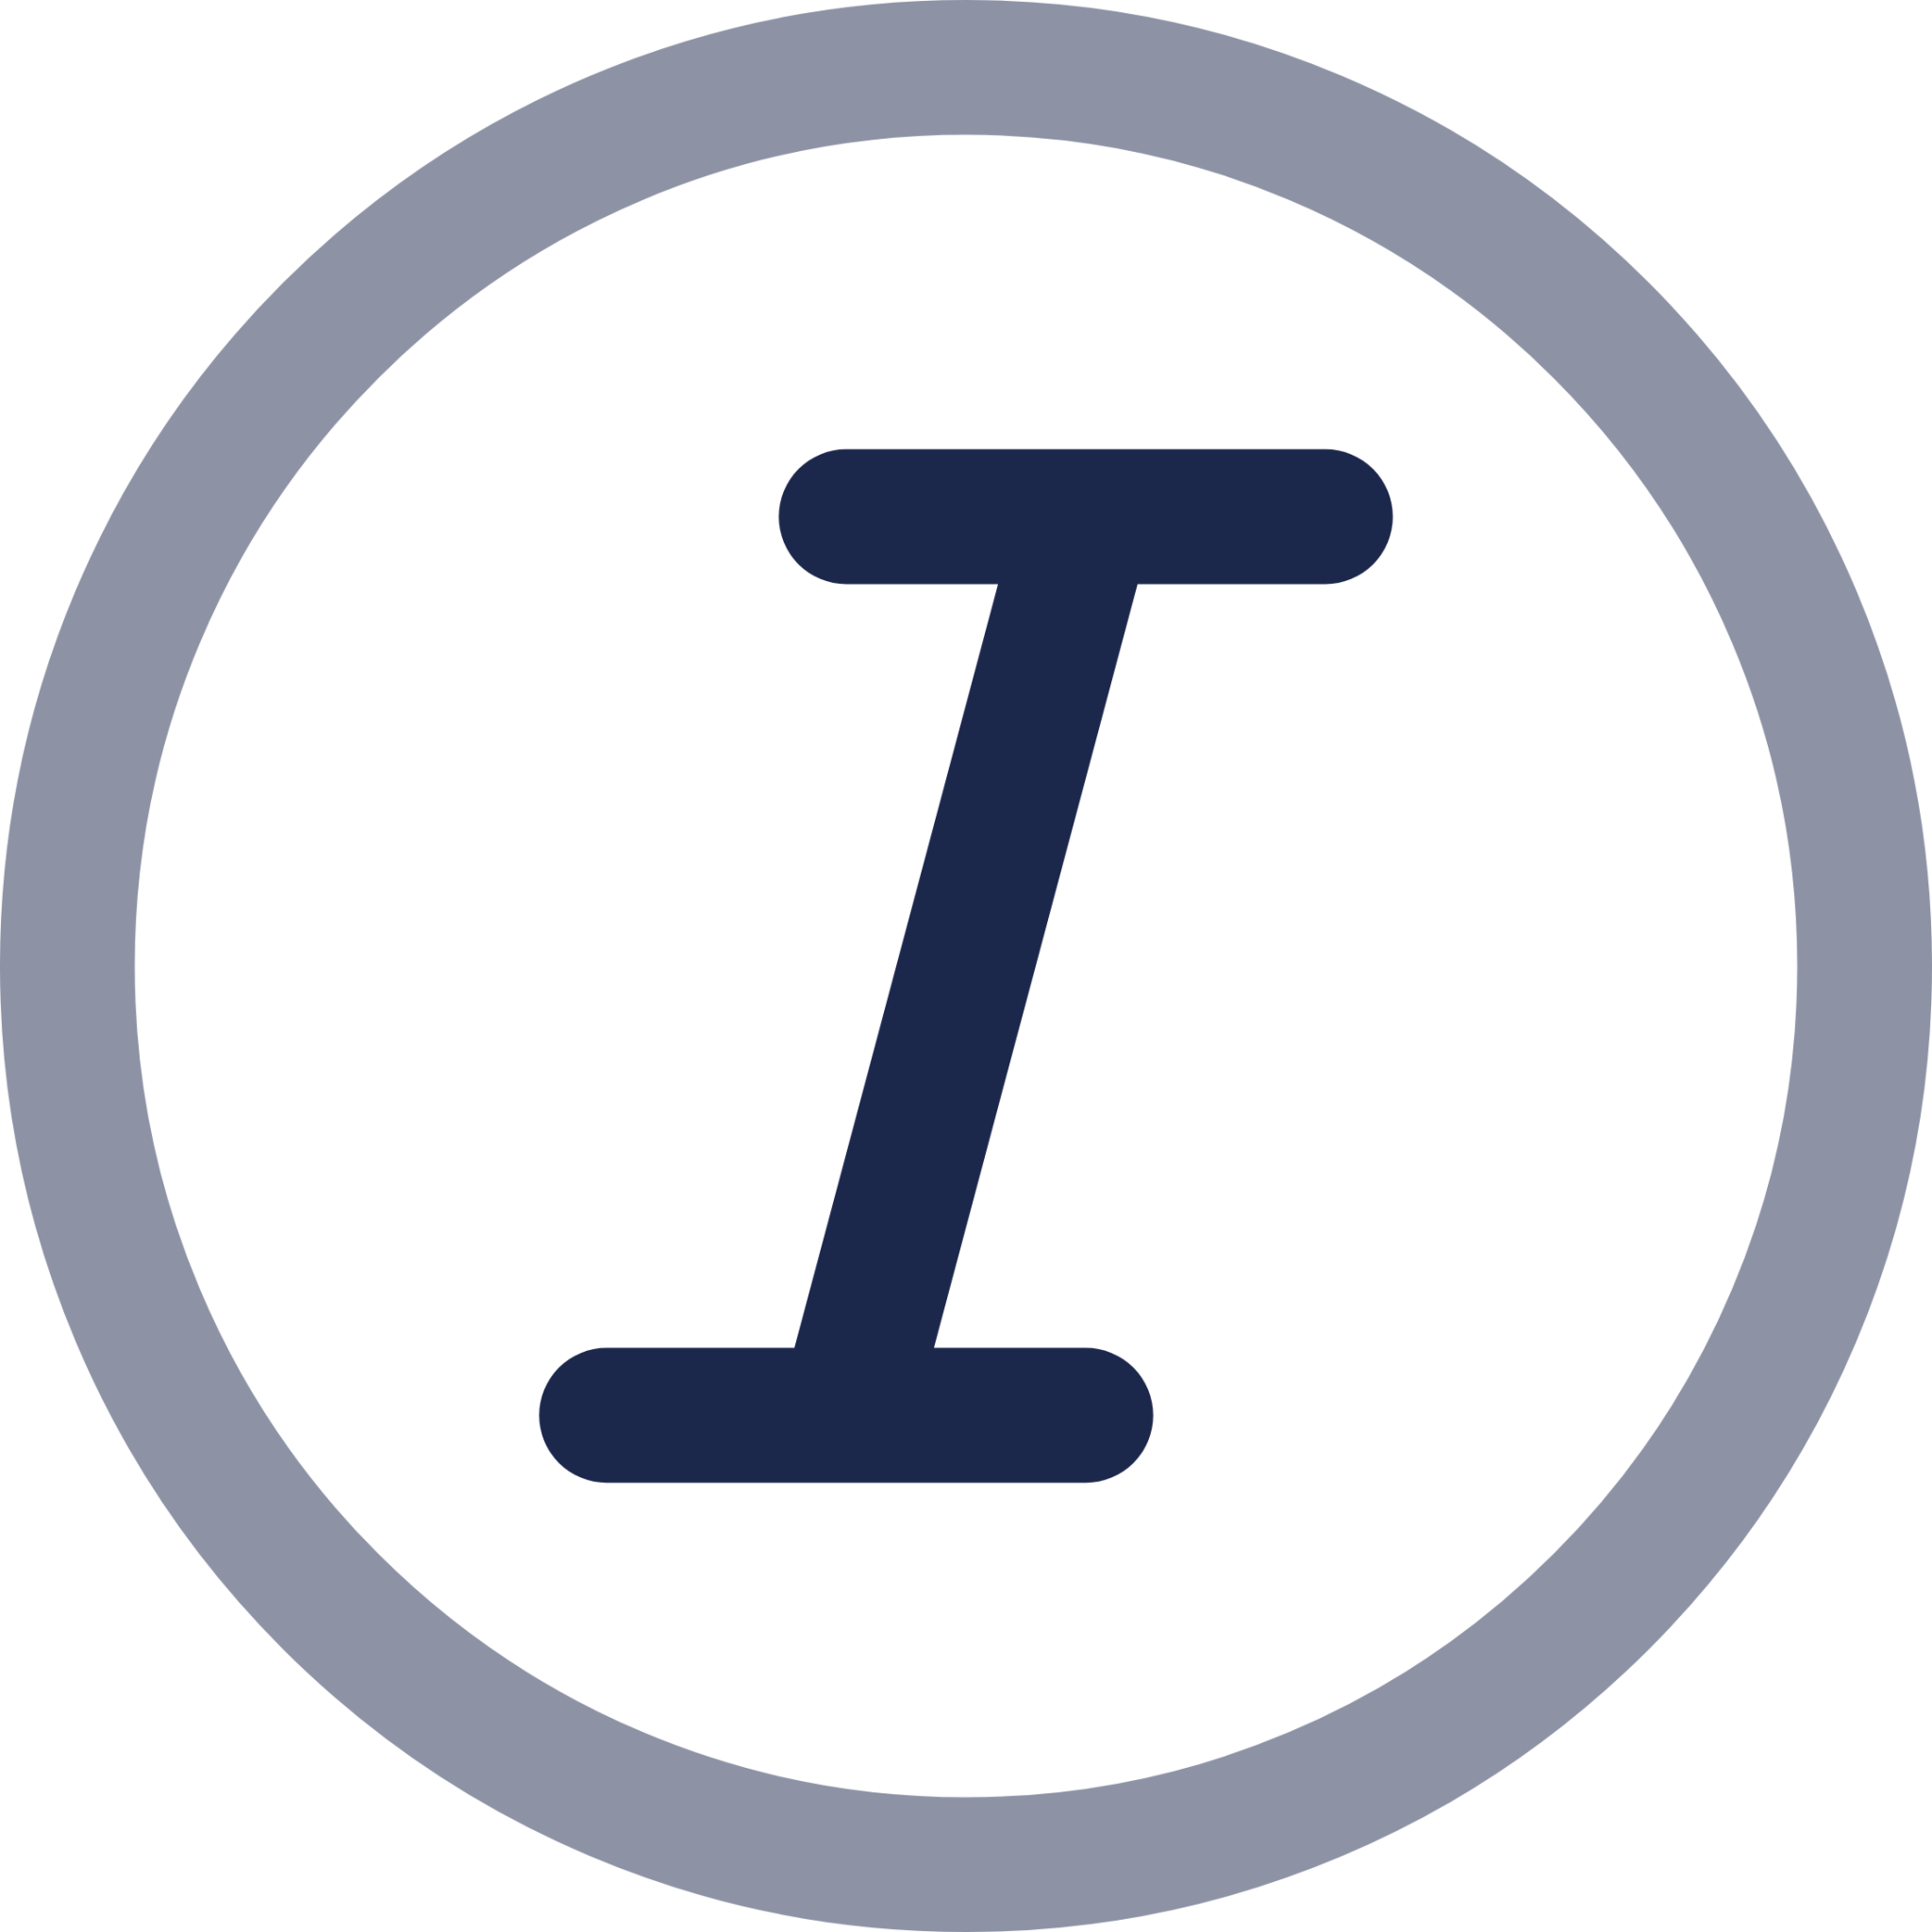 Text Italic Circle icon